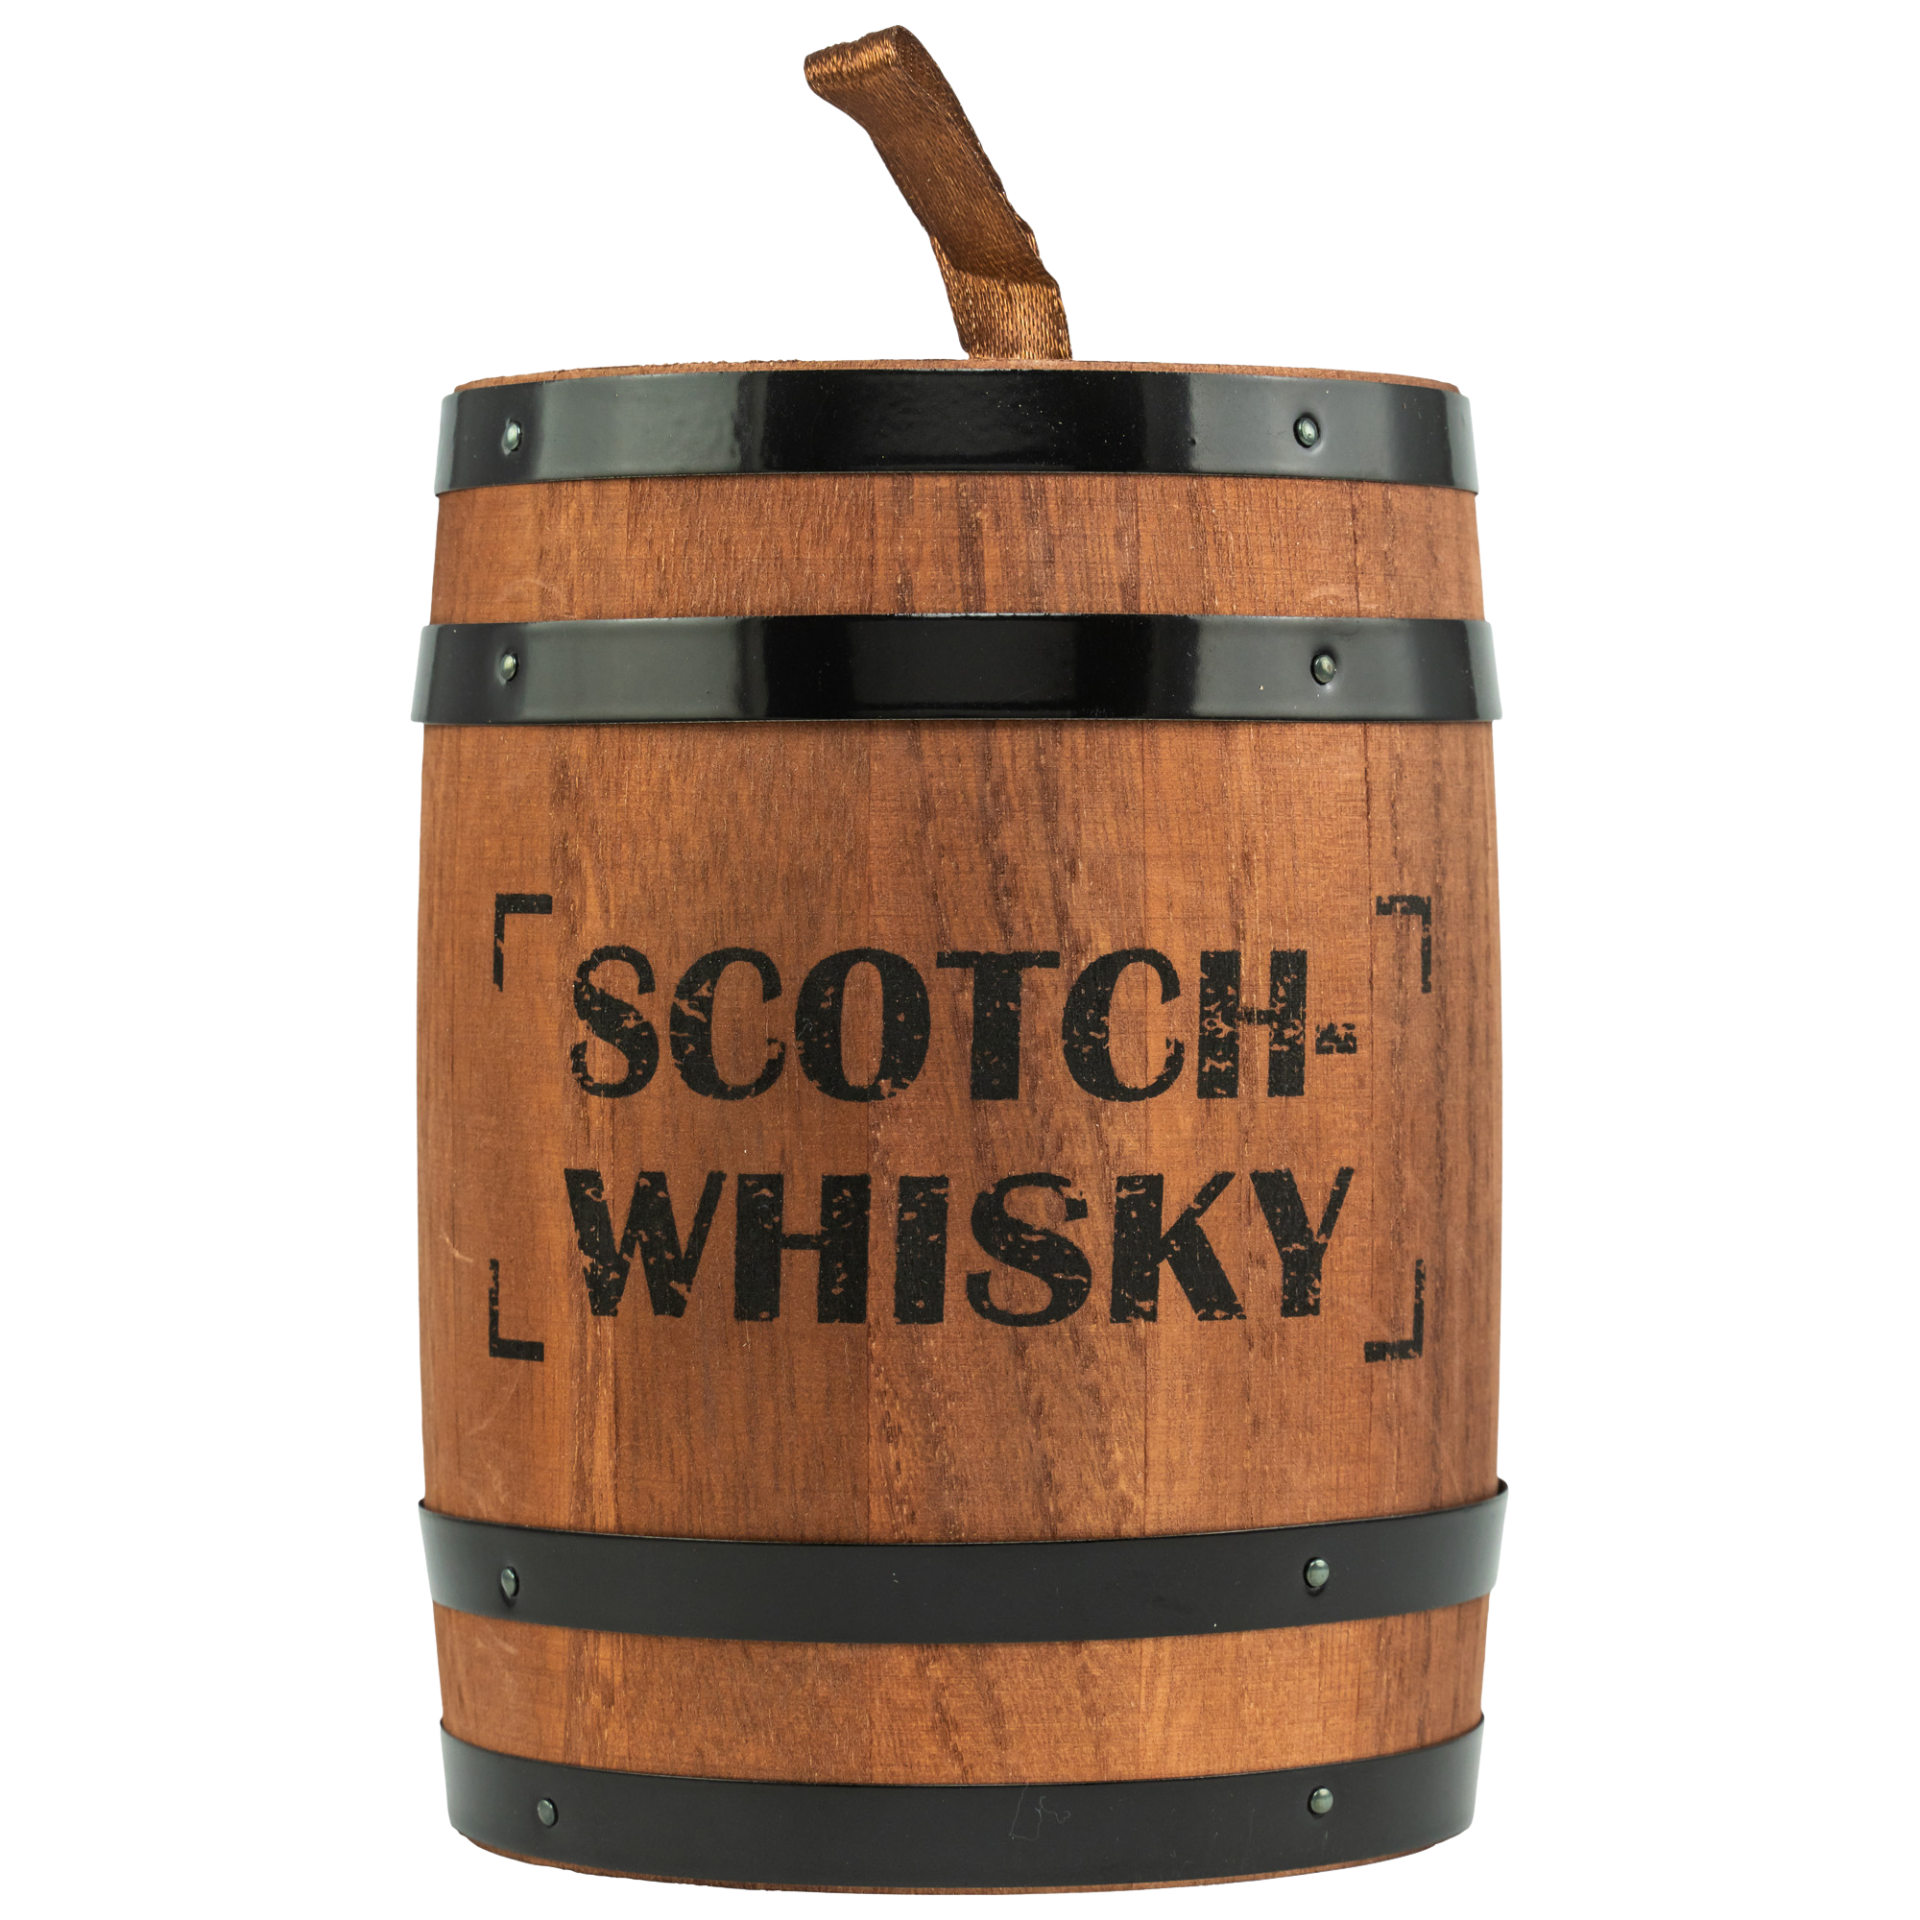 Taste24 Scotch-Whisky-Tasting-Fass 7x0,02l